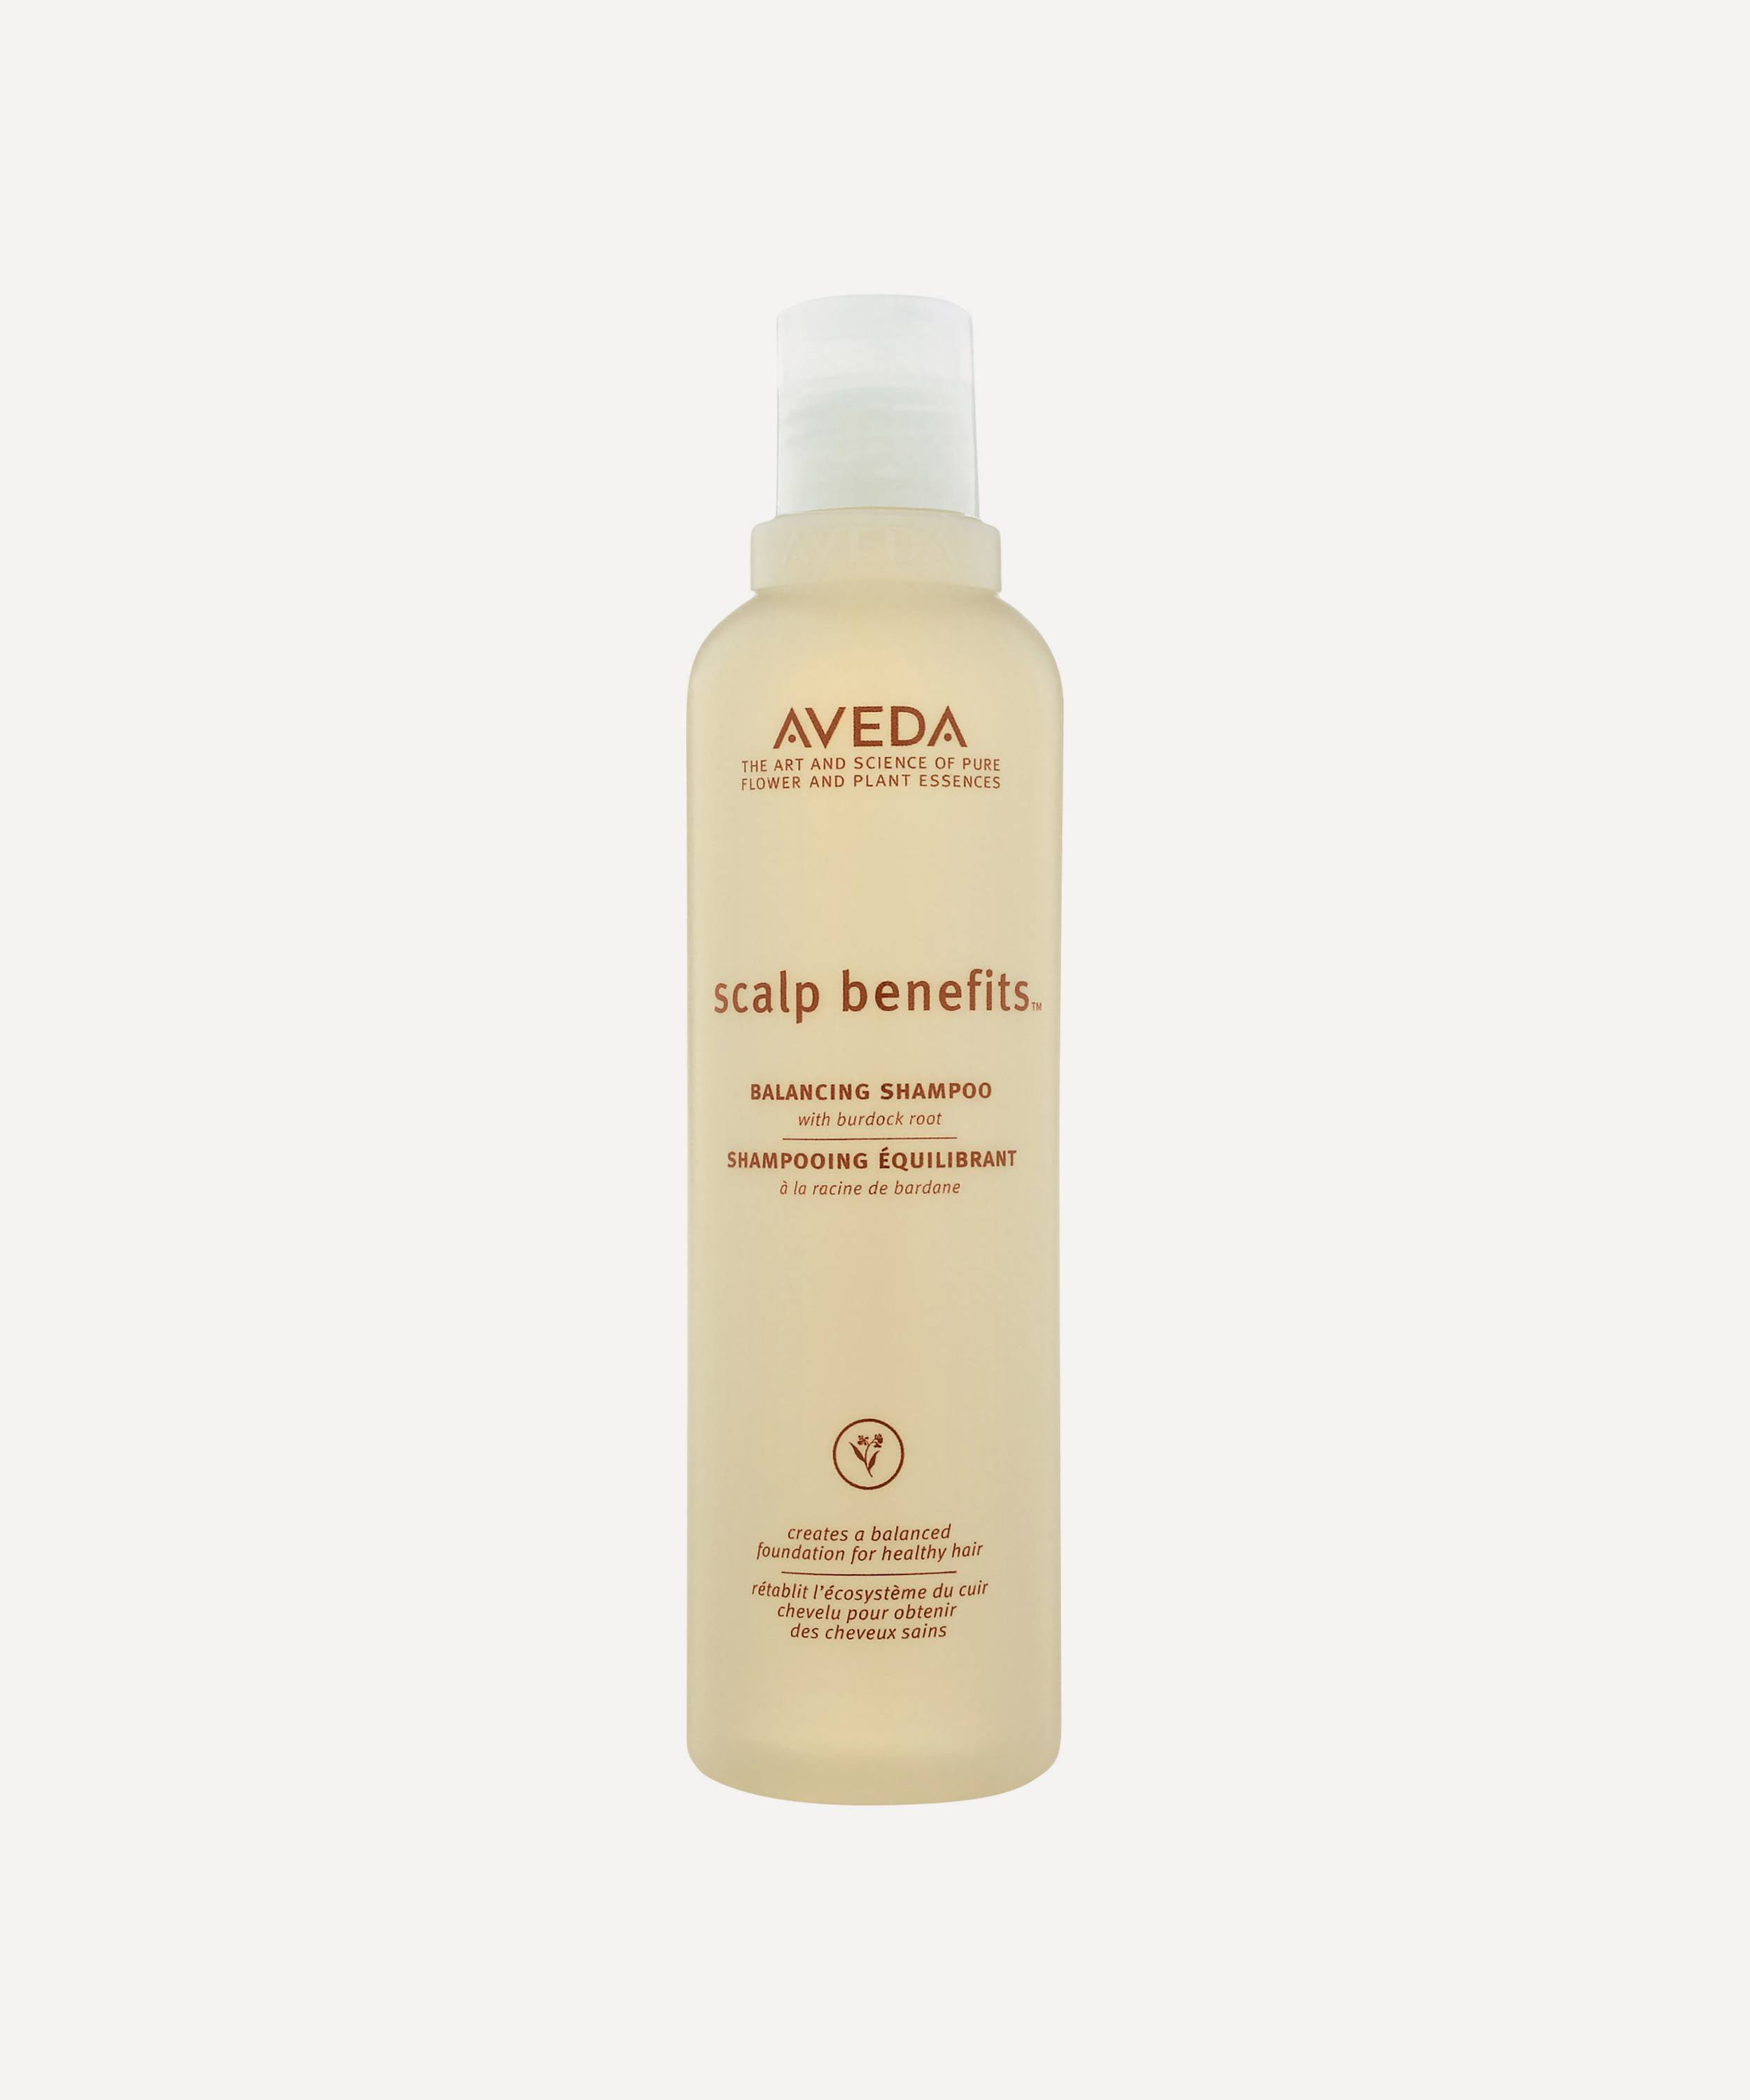 mesh Utilgængelig nå Aveda Scalp Benefits Balancing Shampoo 250ml | Liberty